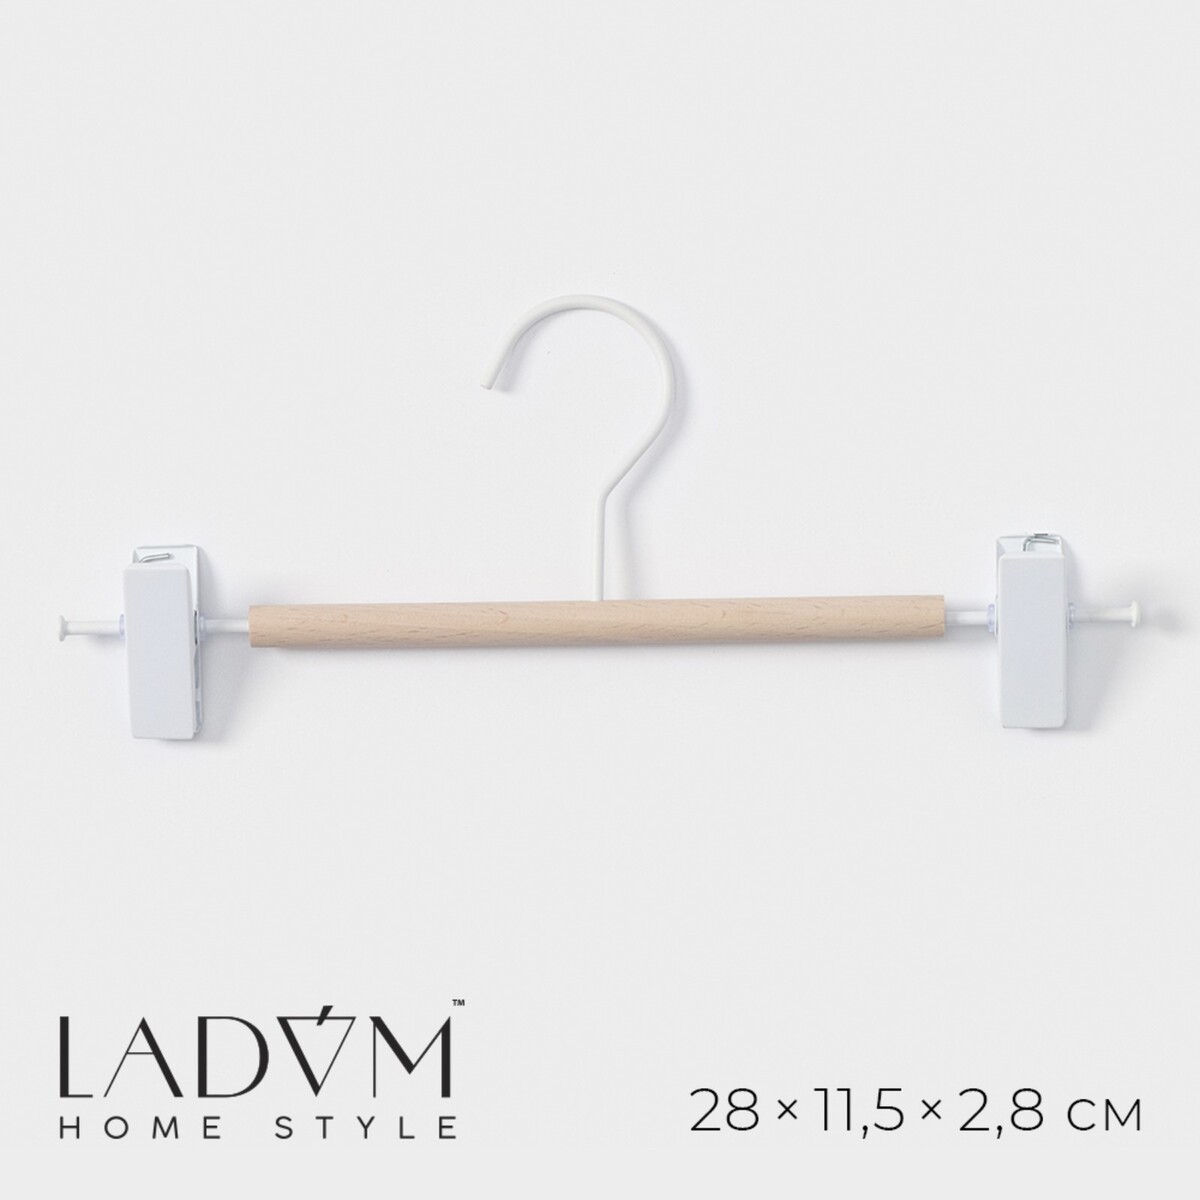 Вешалка для брюк и юбок ladо́m laconique, 28×11,5×2,8 см, цвет белый bradex вешалка для брюк 5 в1 гинго